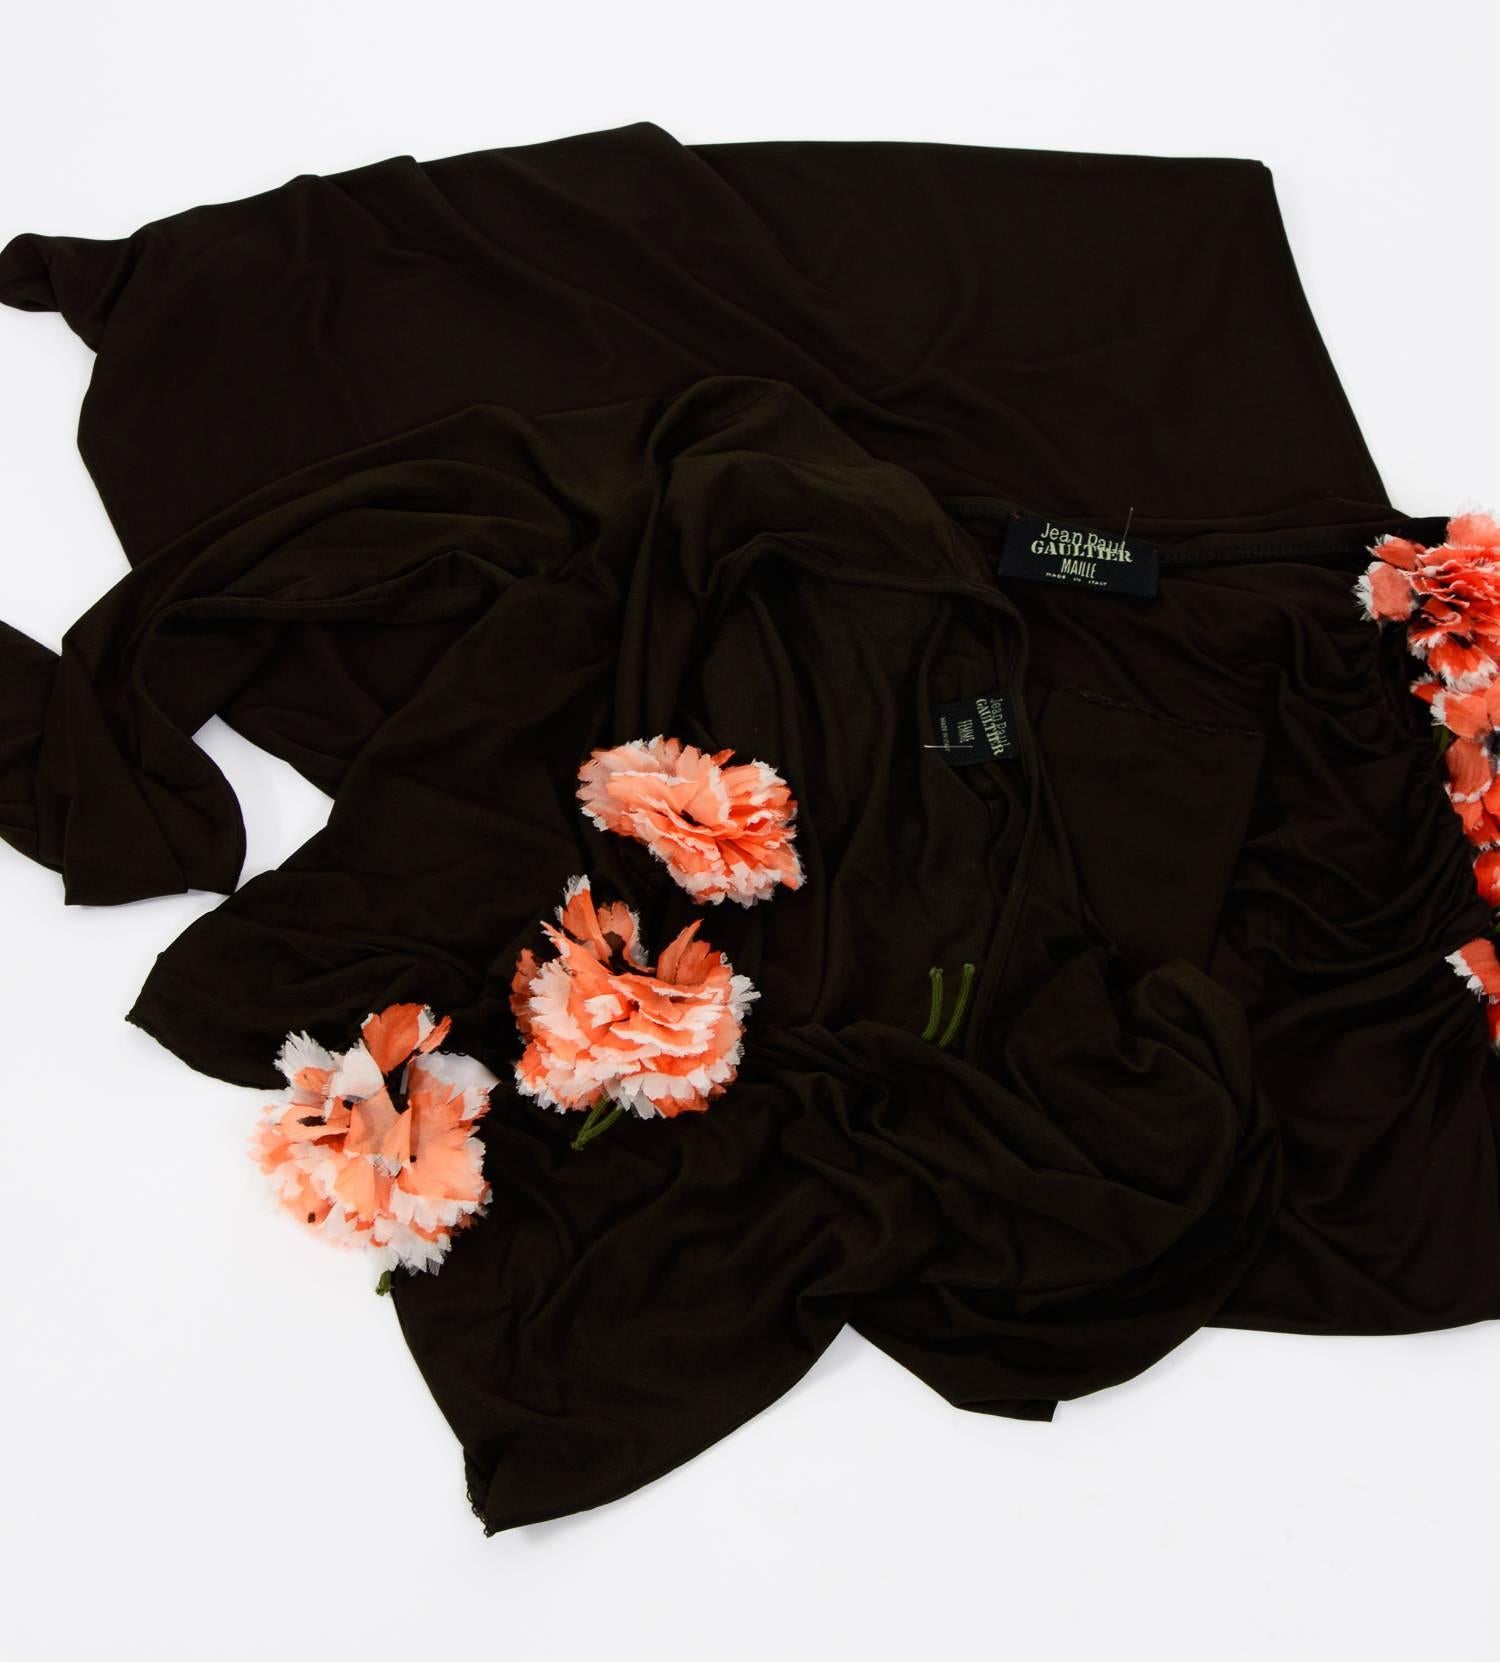 Jean paul Gaultier Vintage silk jersey brown top and skirt set, 1990s  1